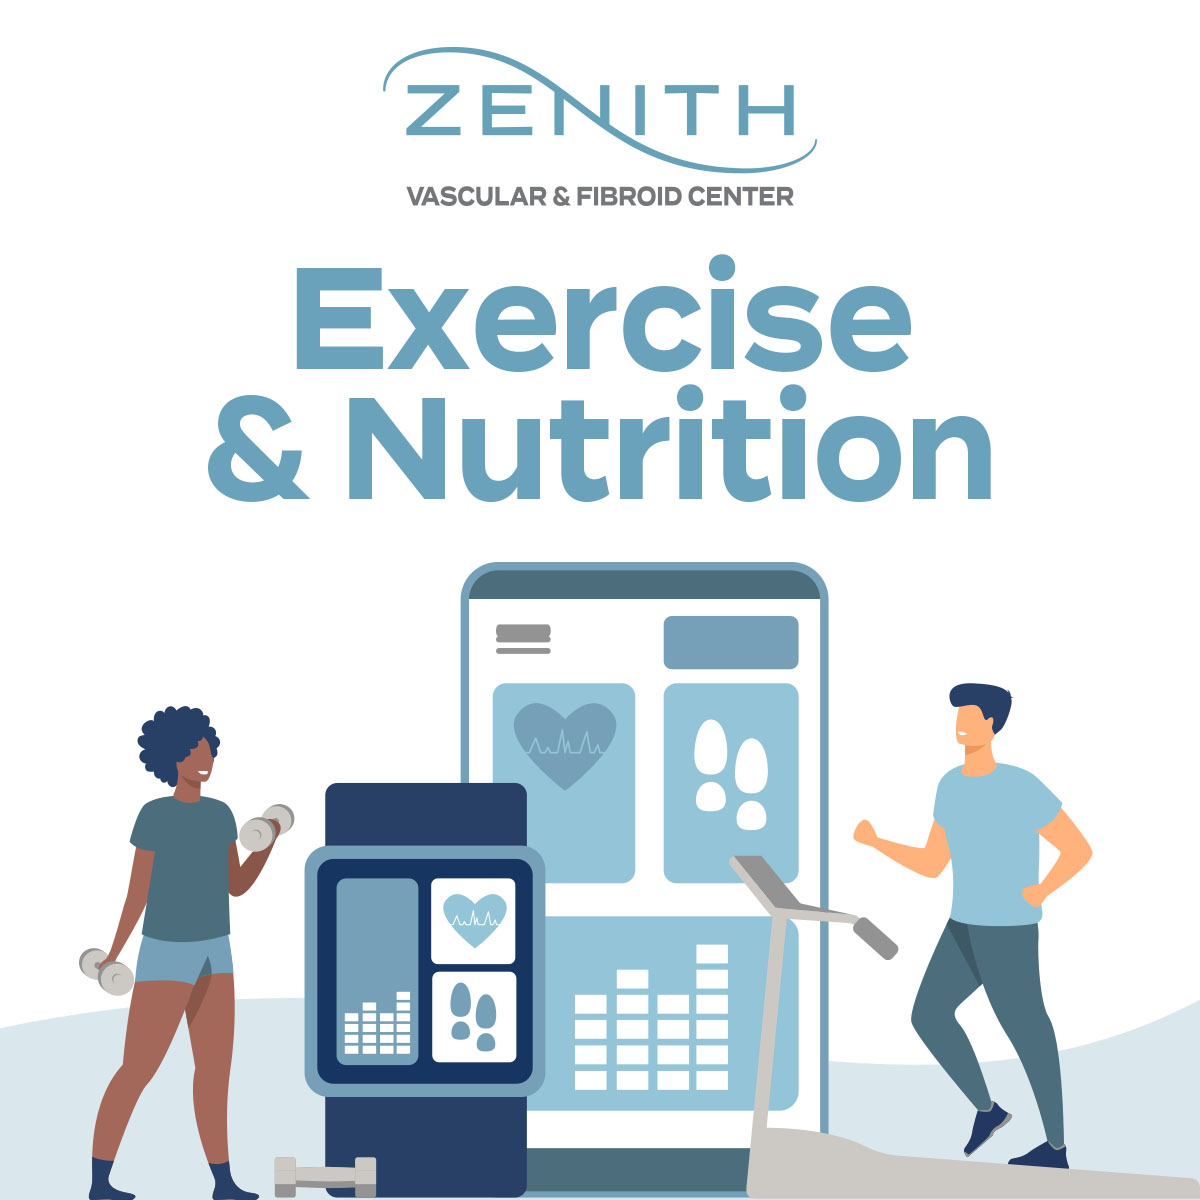 effective exercises for peripheral artery disease zenith